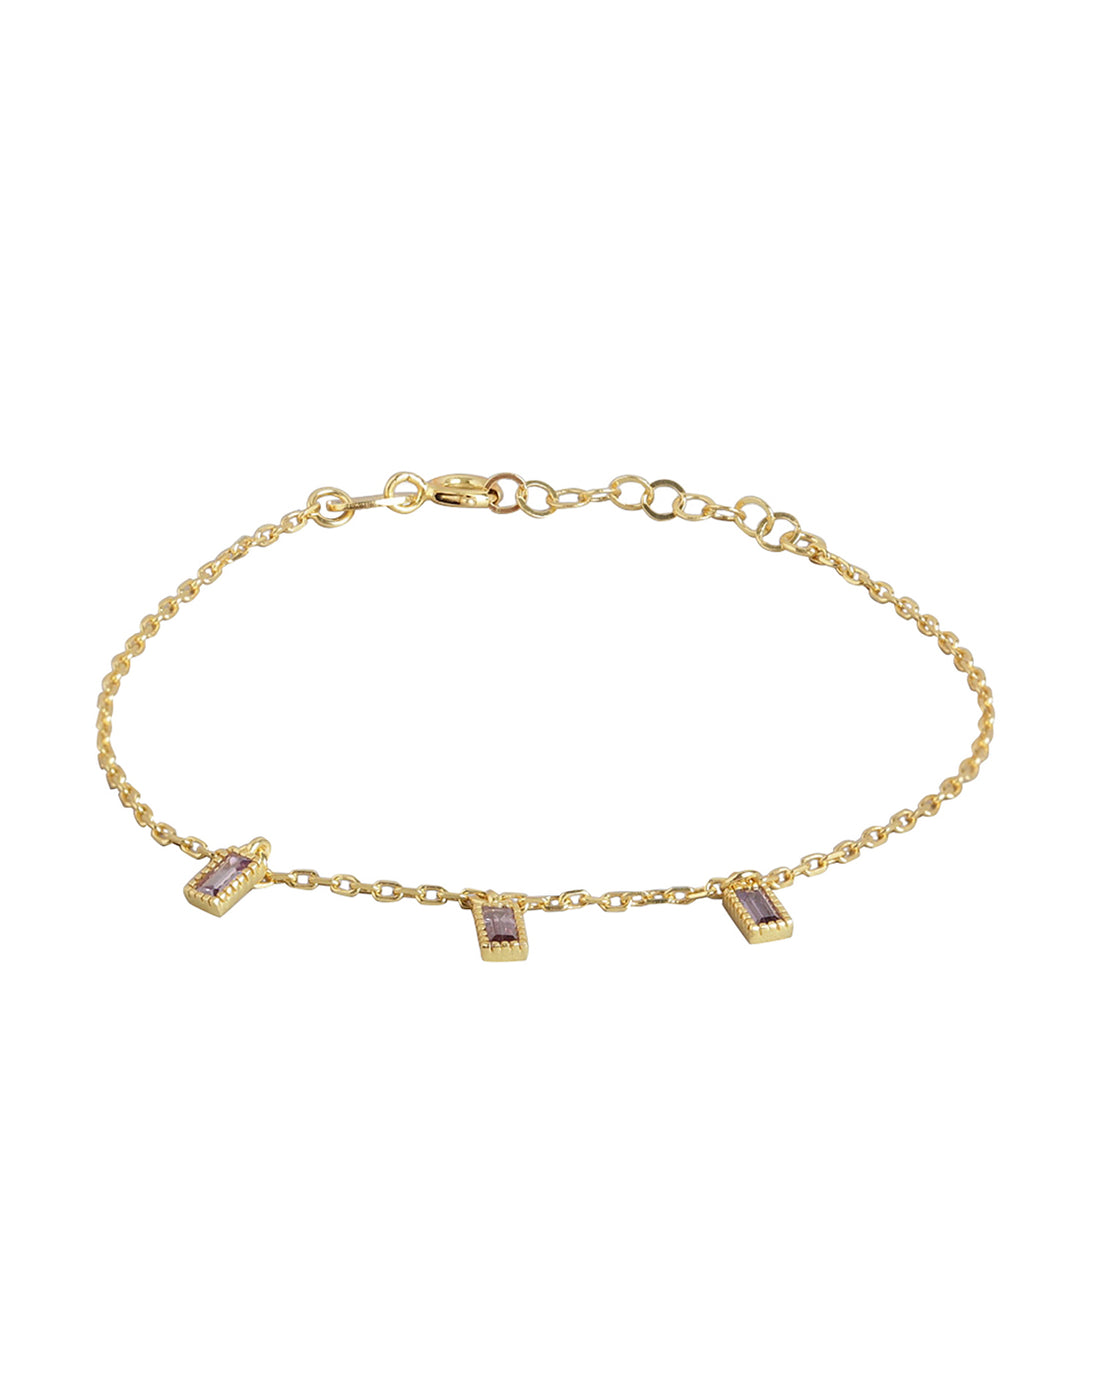 Carlton London Gold Plated Cz Studded Charm Bracelet For Women